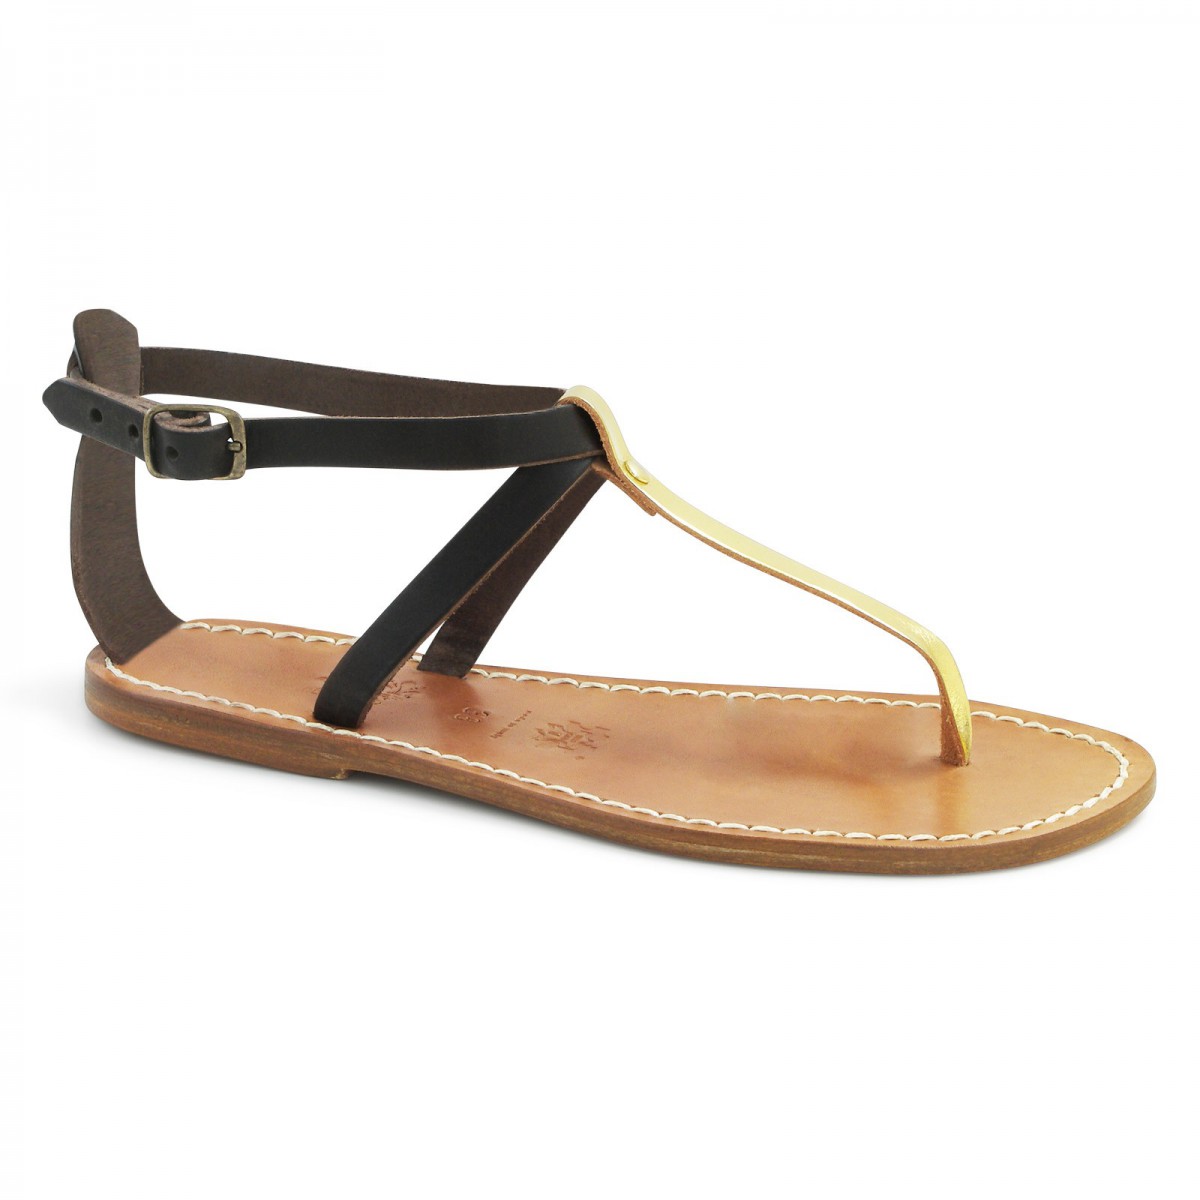 Dark brown flat thong sandals for women